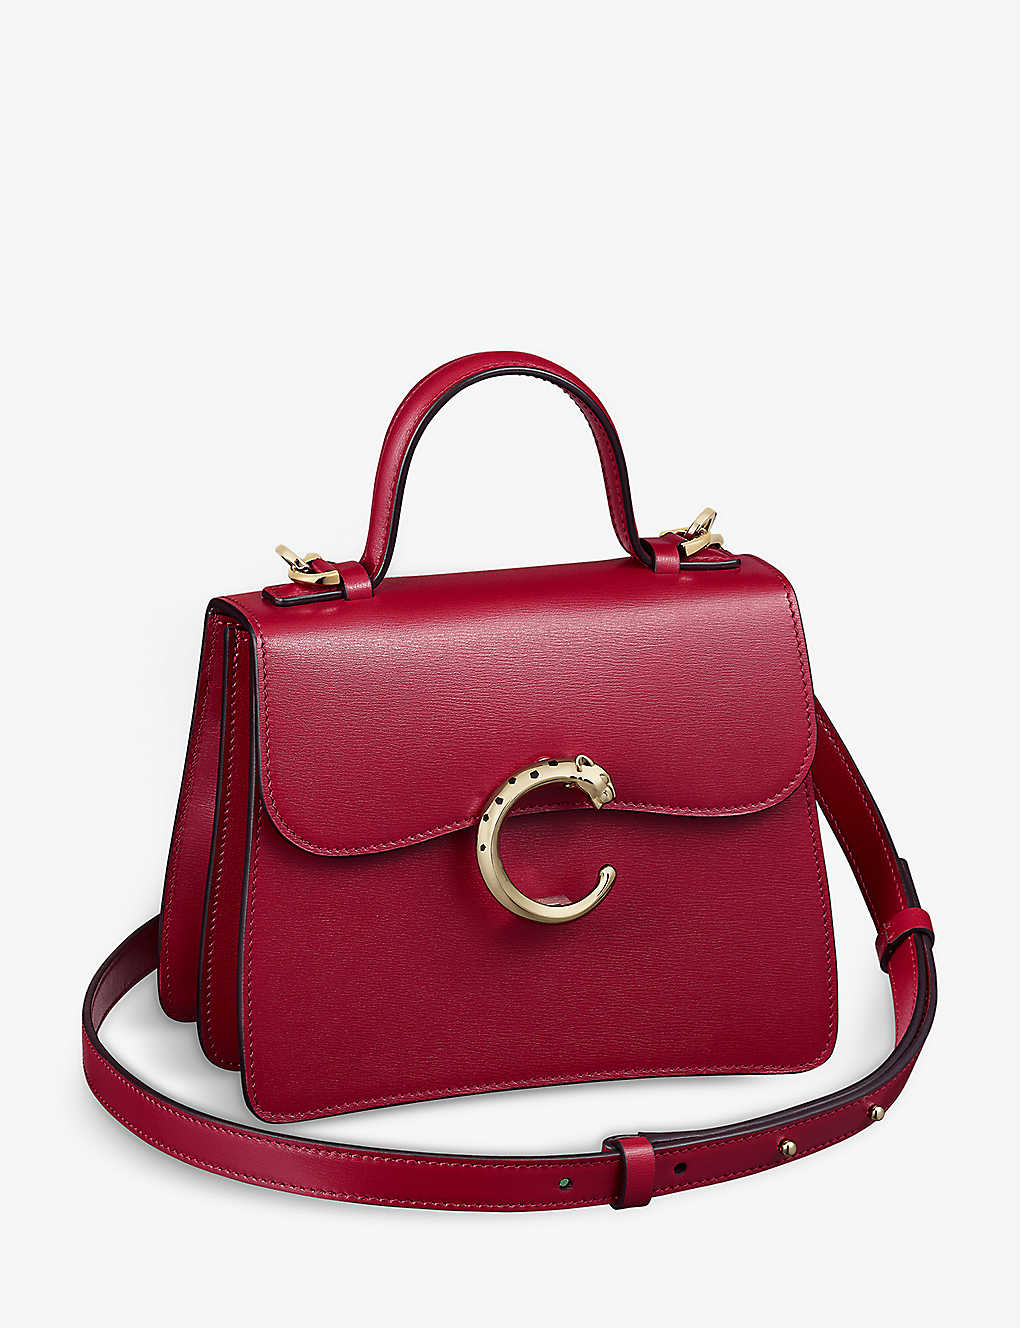 Cartier Womens Cherry Red Panthère De Mini Leather Cross-body Bag